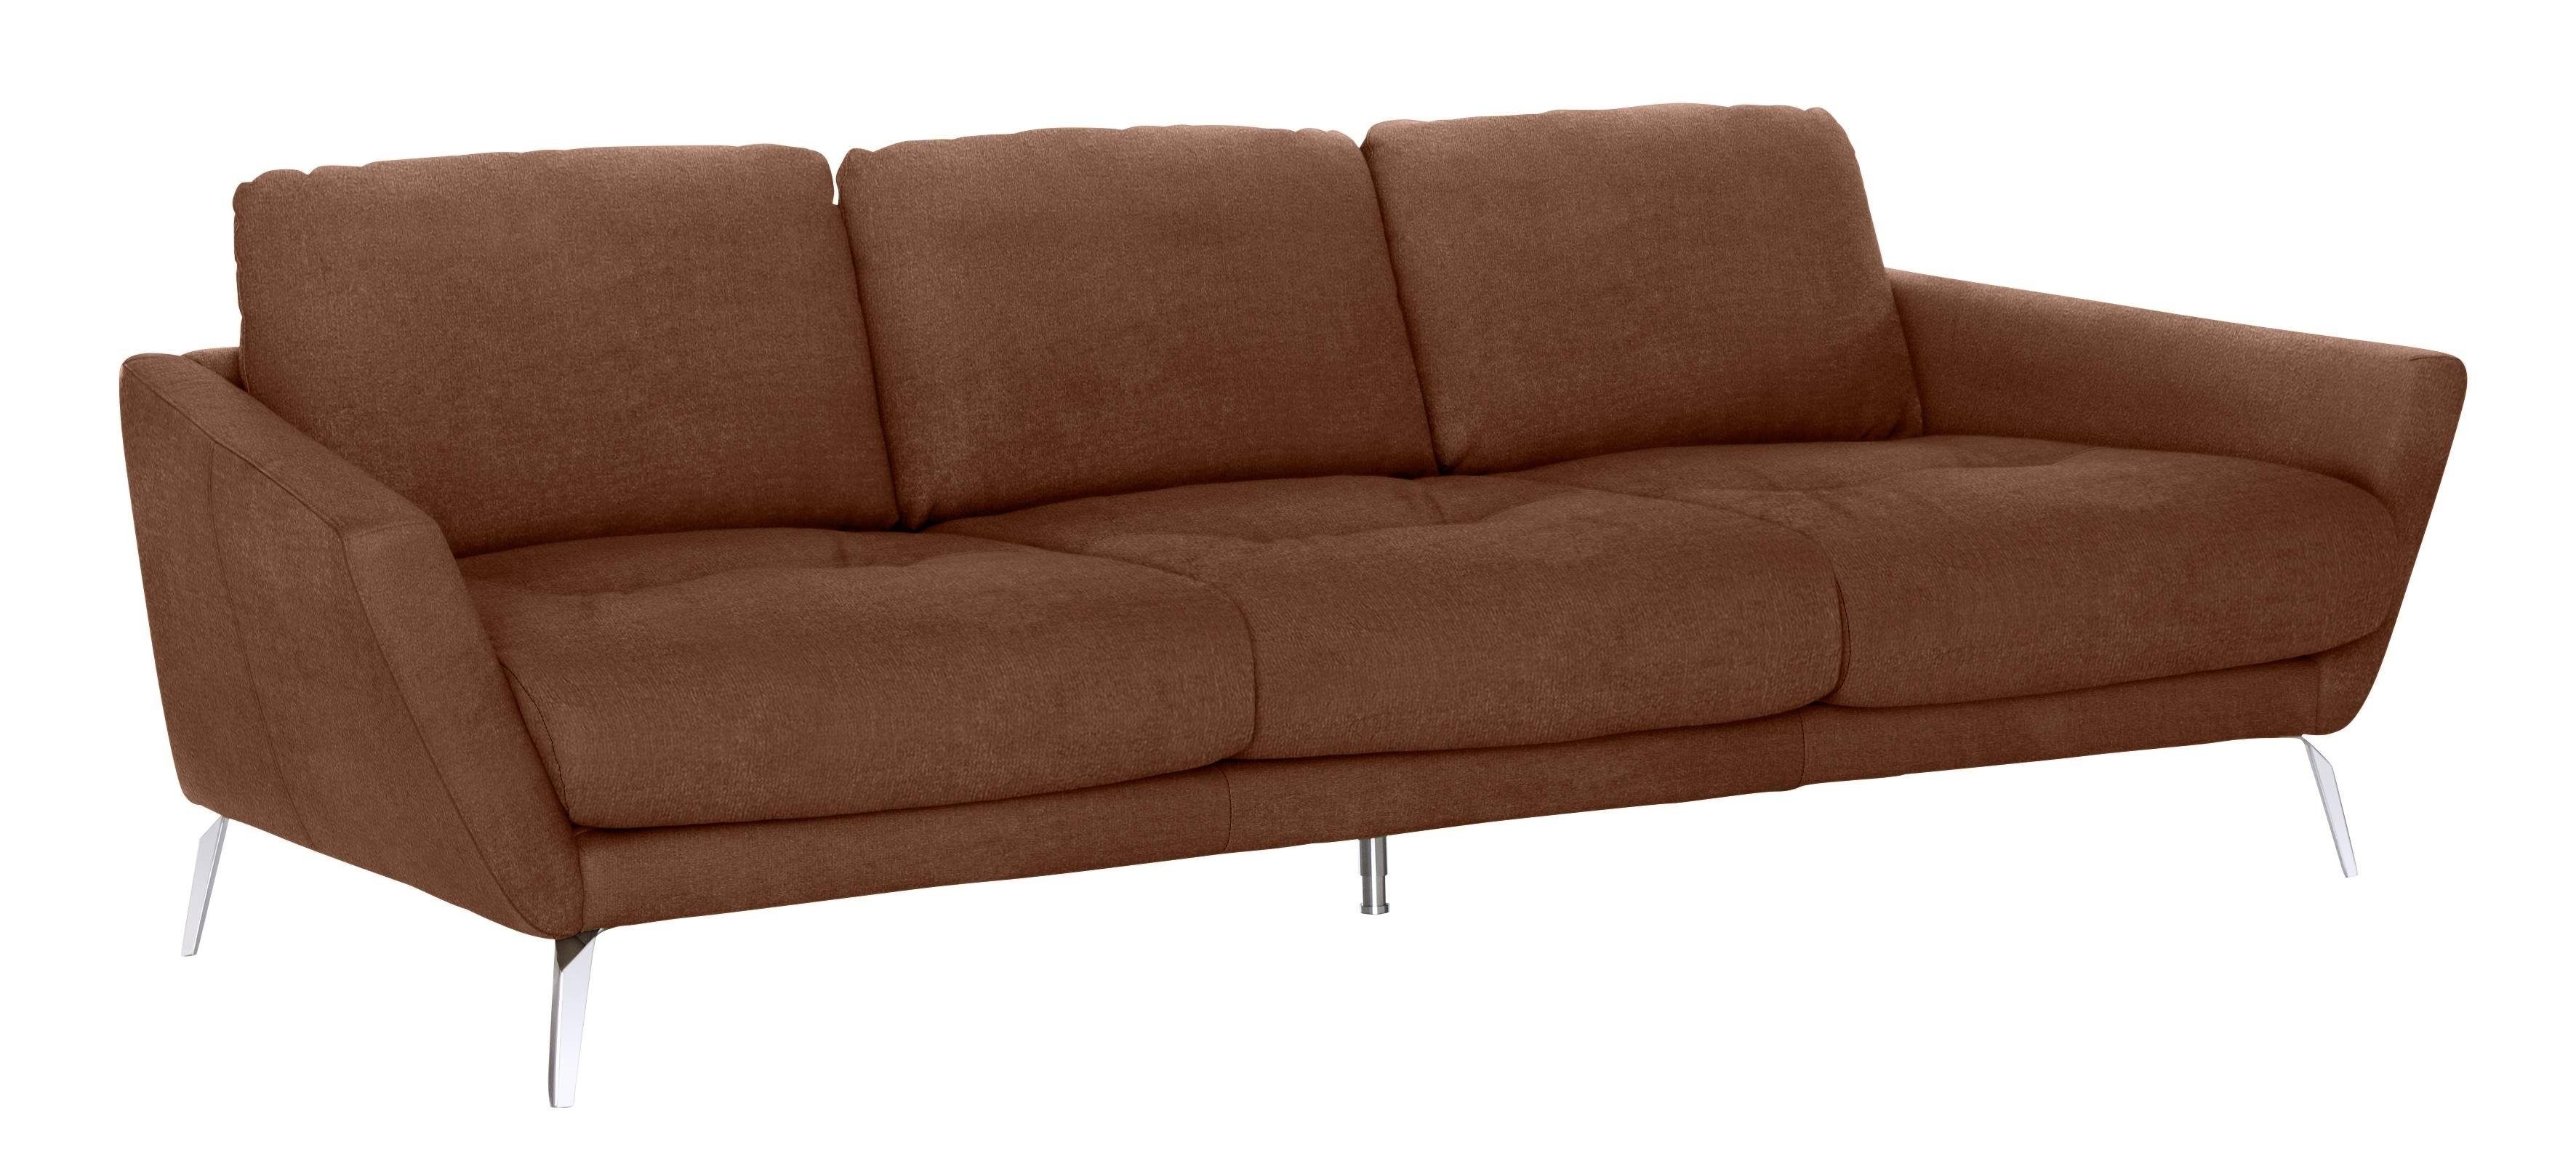 W.SCHILLIG Big-Sofa softy, mit Heftung Sitz, im Chrom glänzend Füße dekorativer